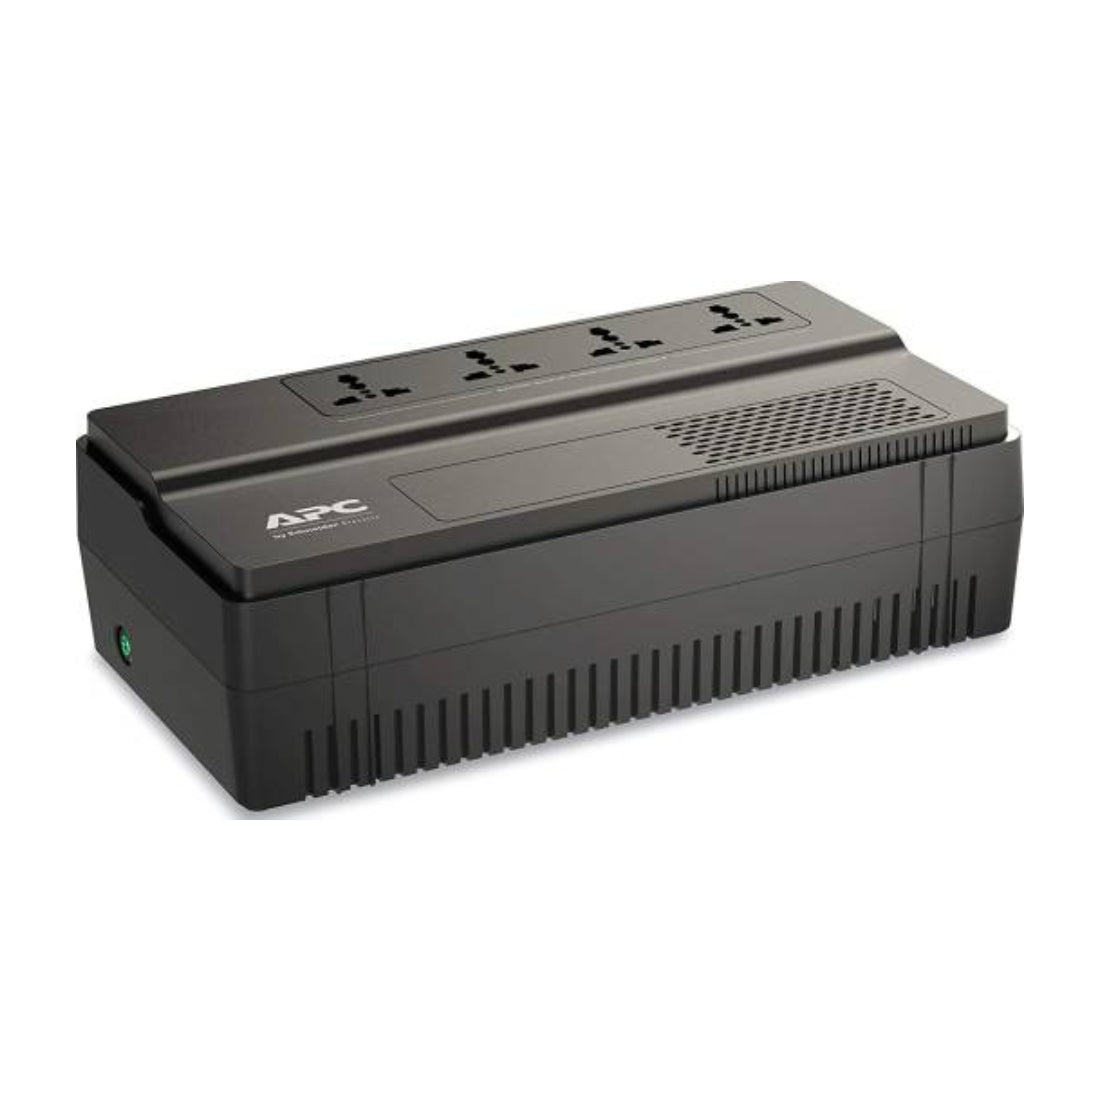 APC Back-UPS 650VA AVR 4 Universal Outlets Uninterruptible Power Supply - Store 974 | ستور ٩٧٤